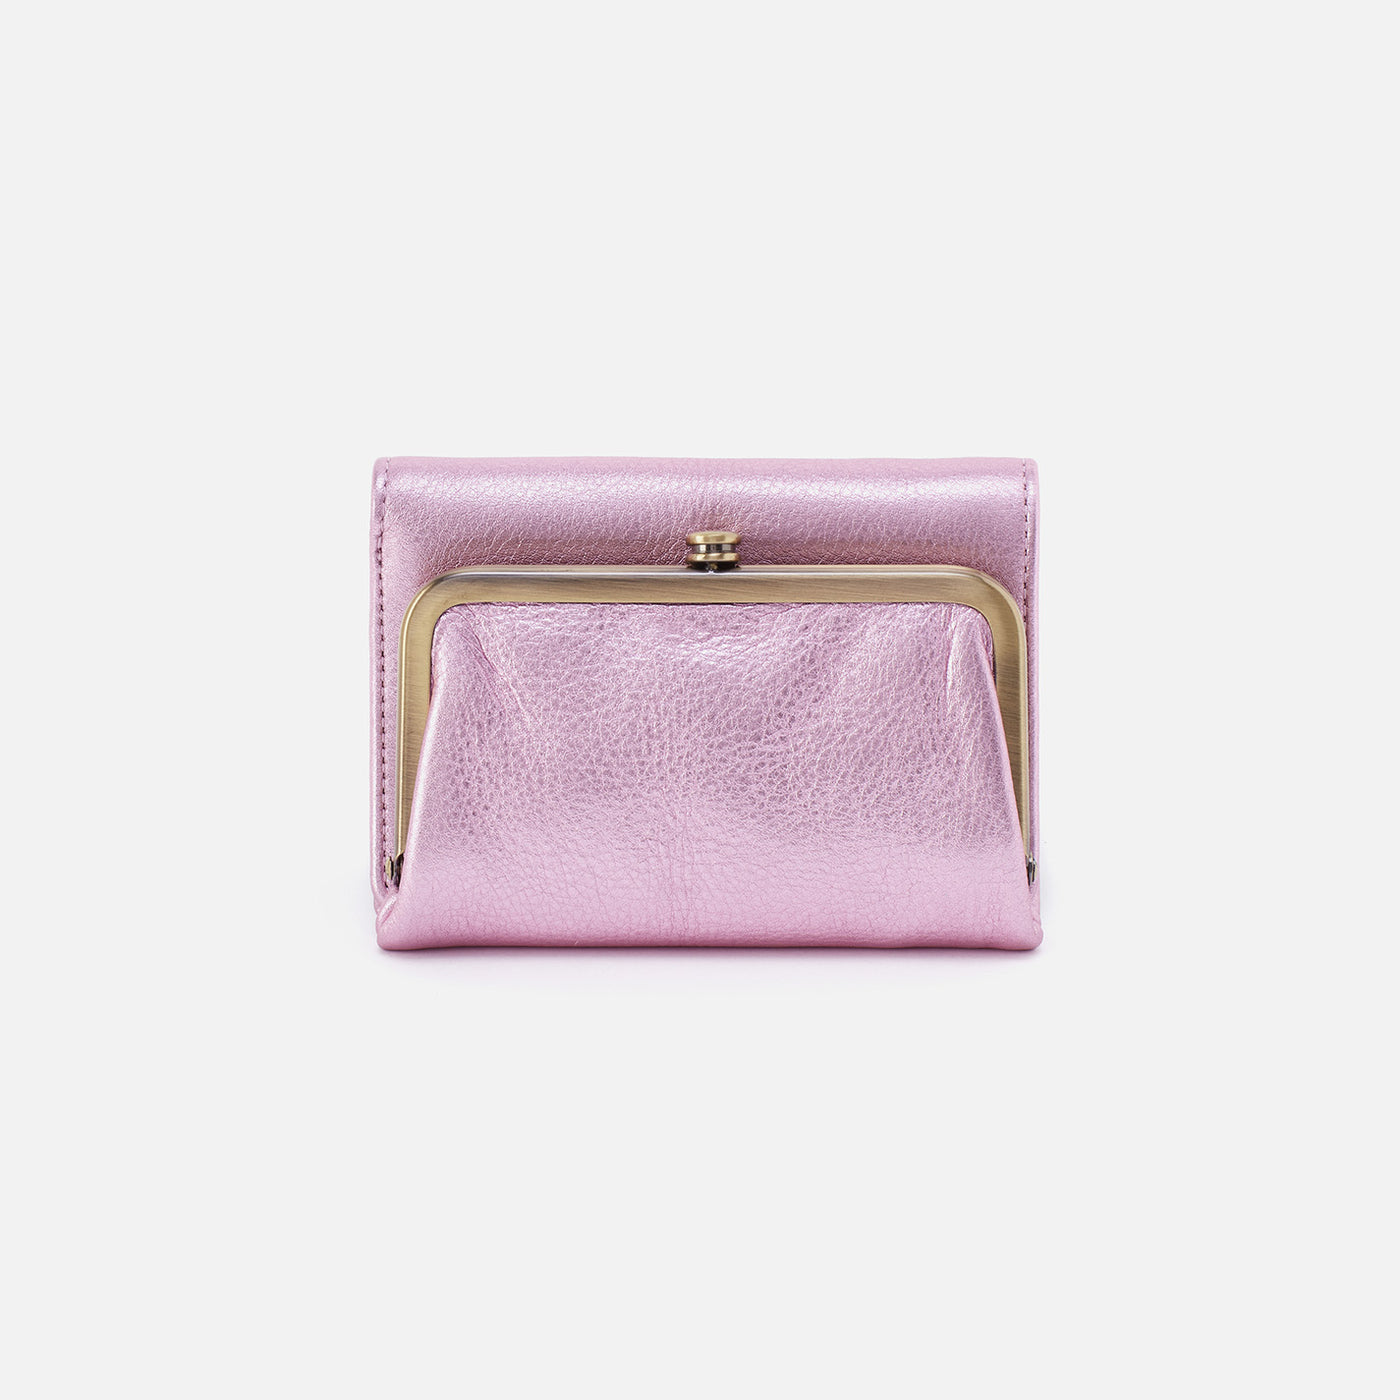 Robin Compact Wallet in Metallic Leather - Pink Metallic